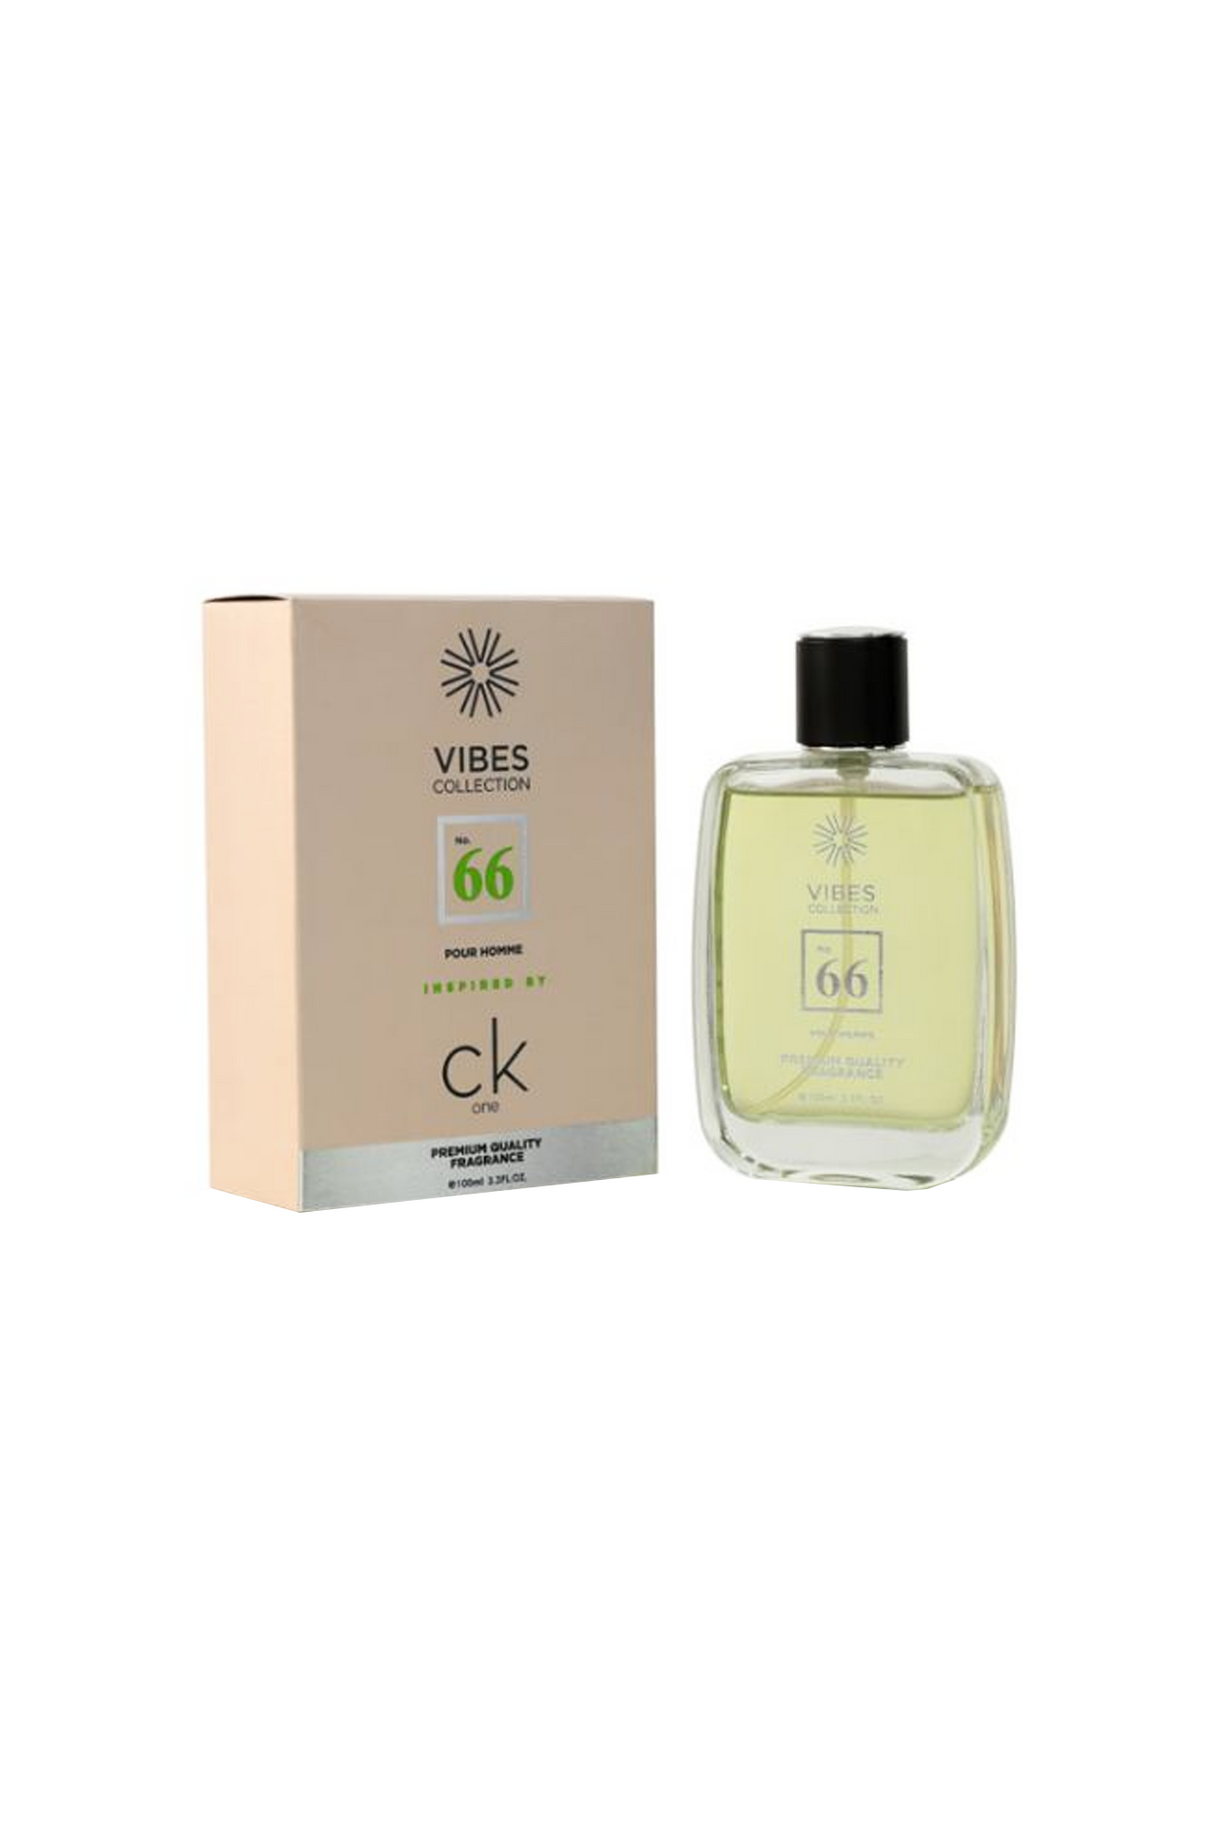 vibes perfume ck 100ml